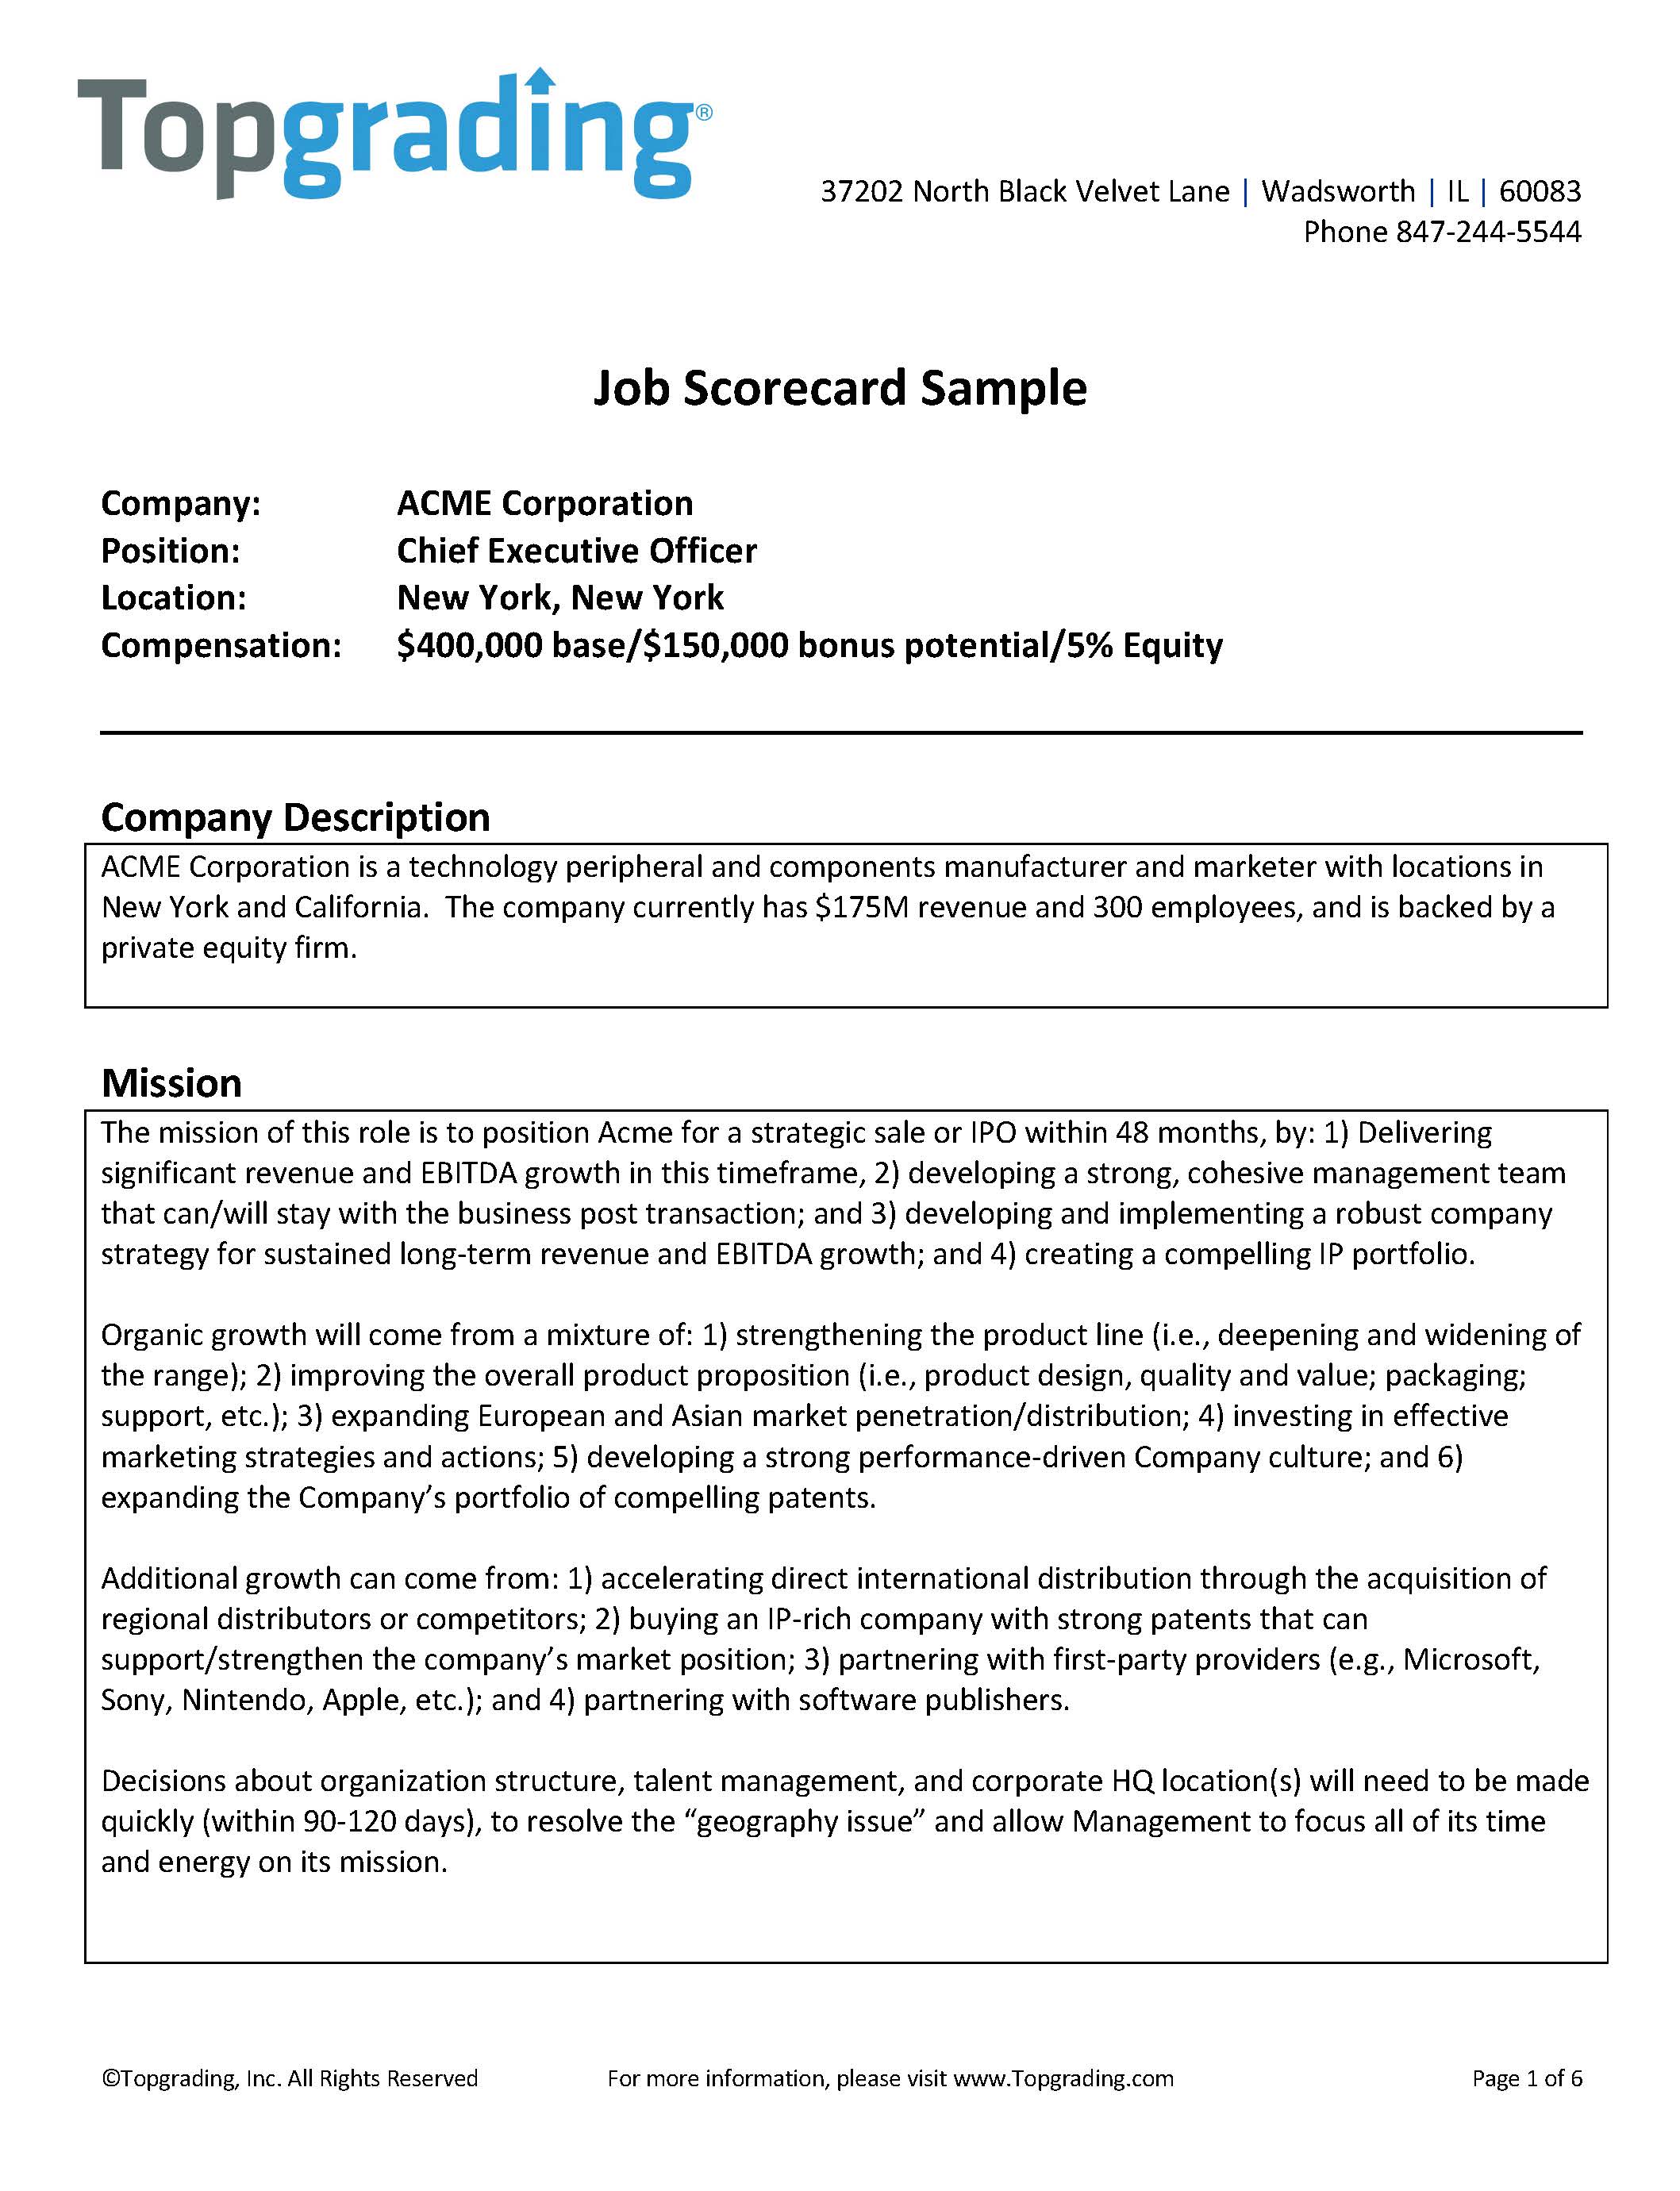 CEO Job Scorecard Sample_Page_1